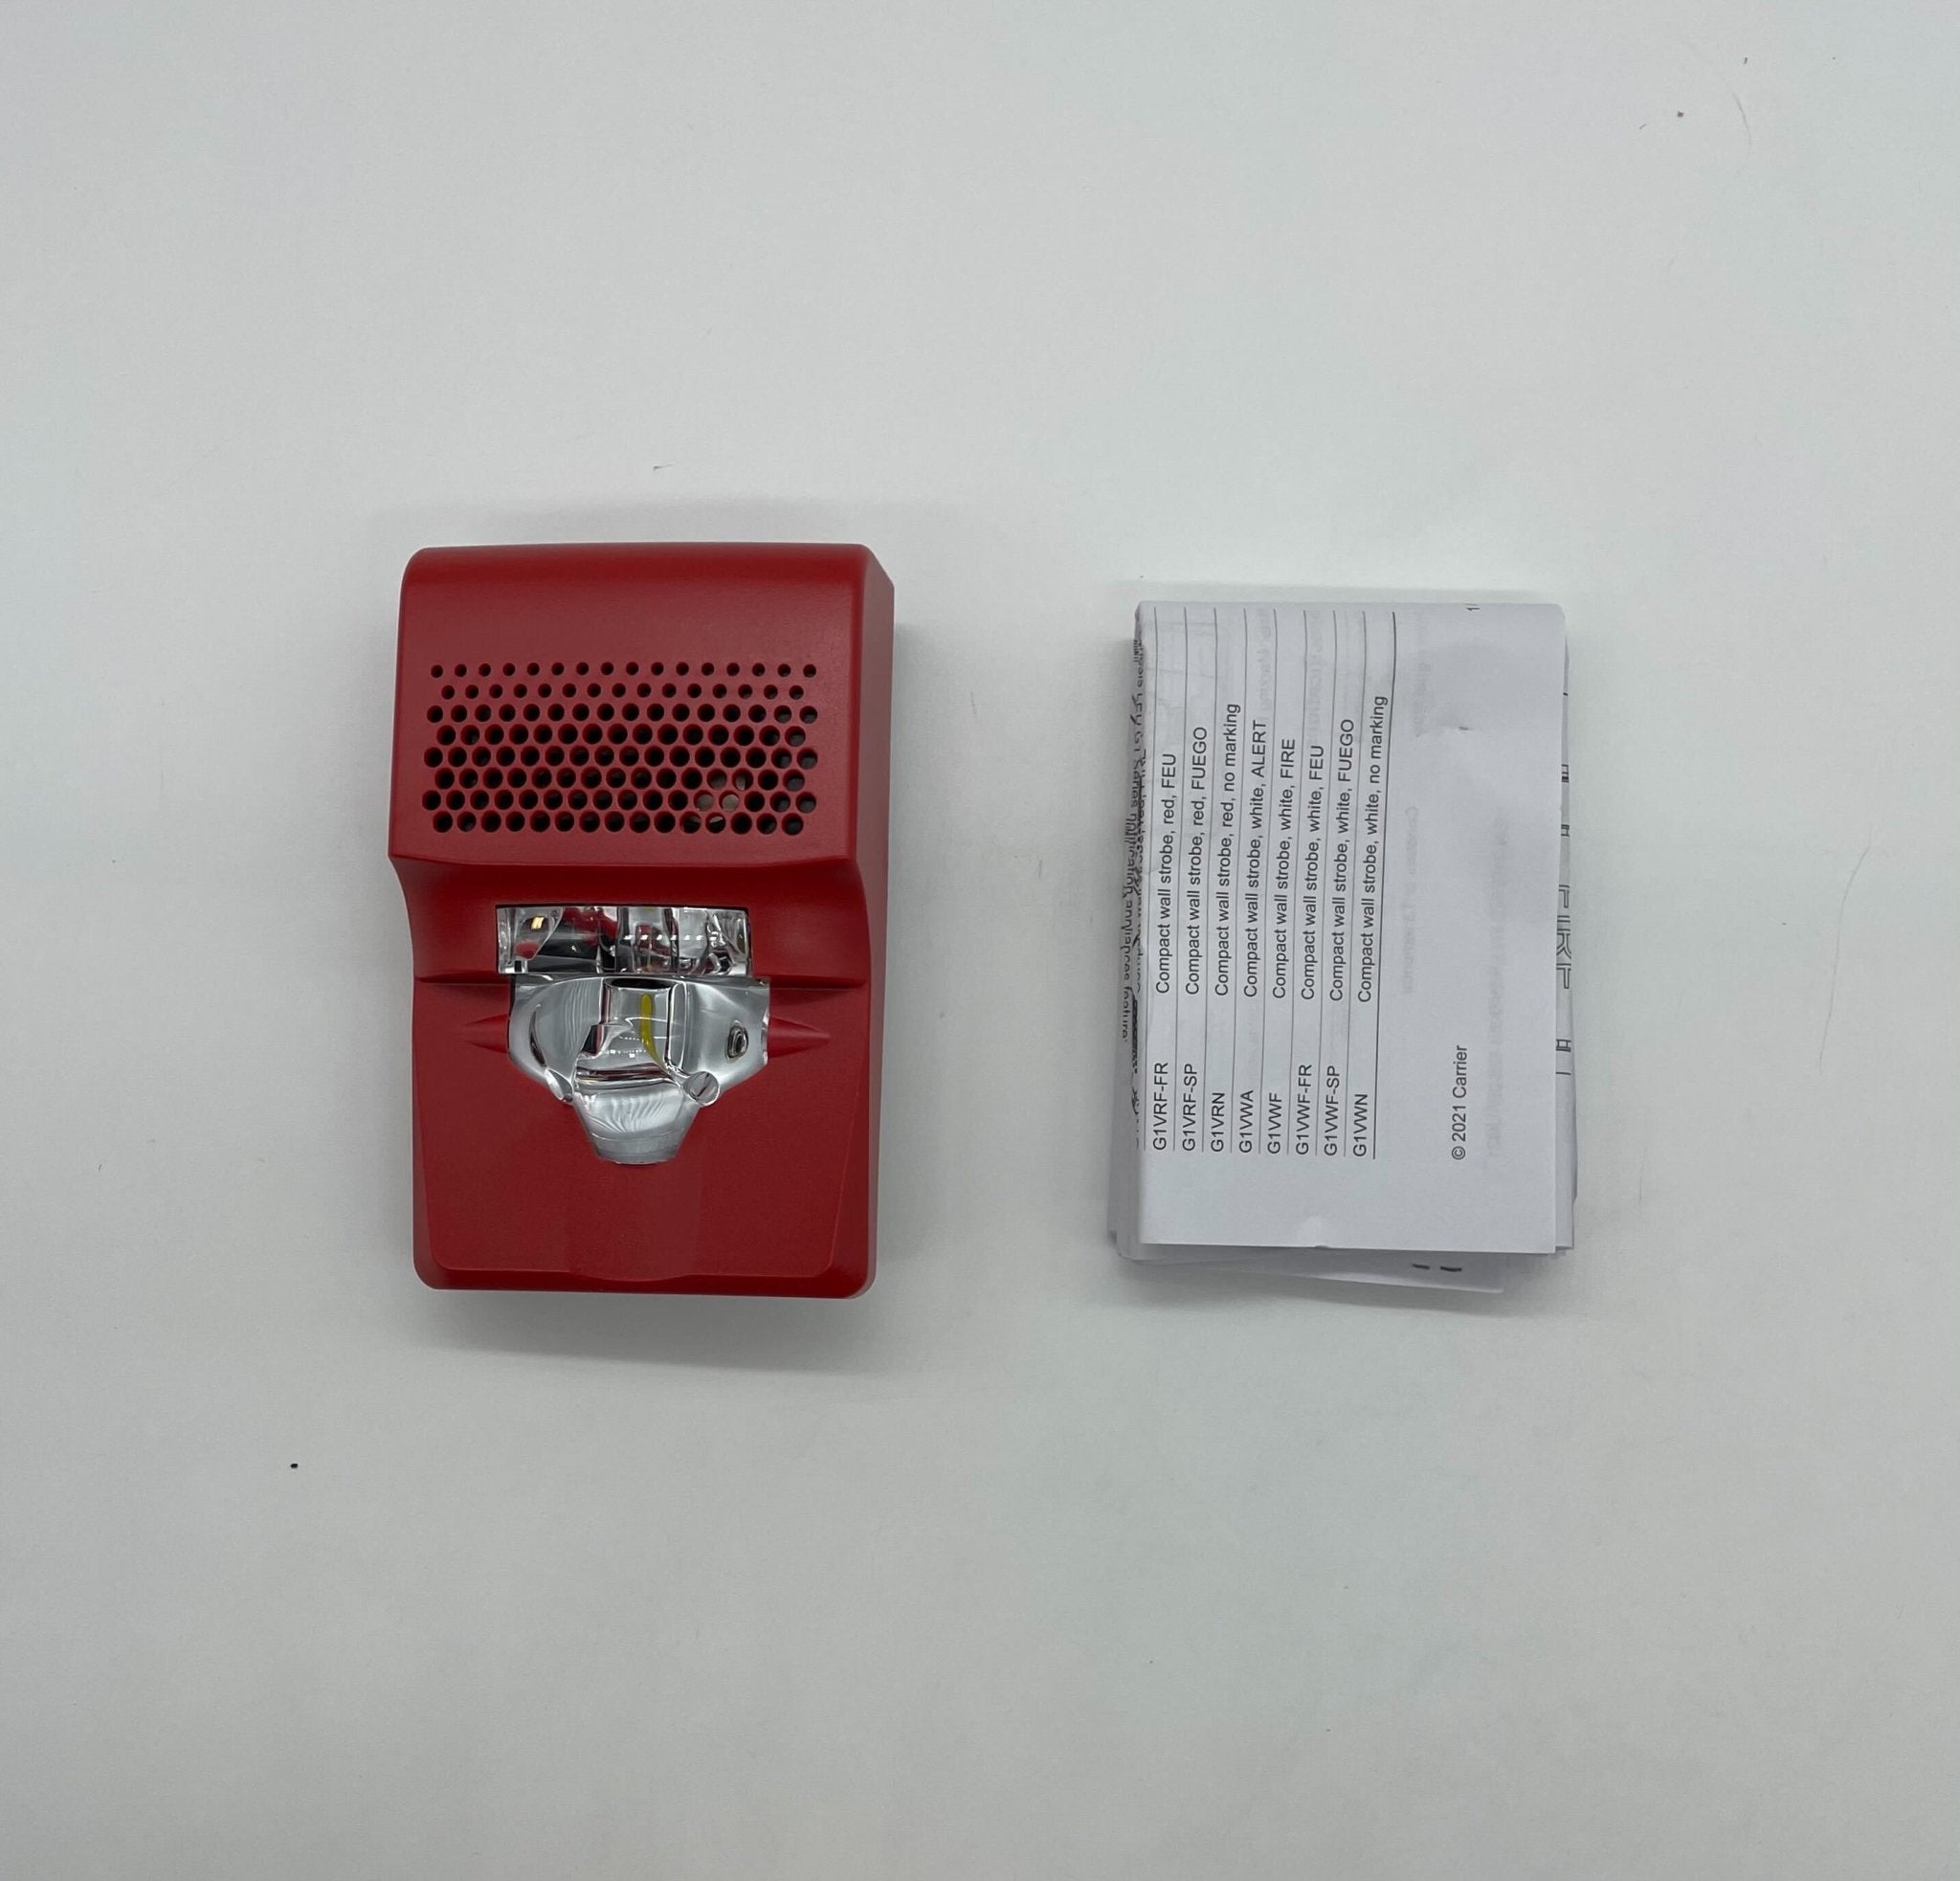 Edwards G1AVRN - The Fire Alarm Supplier